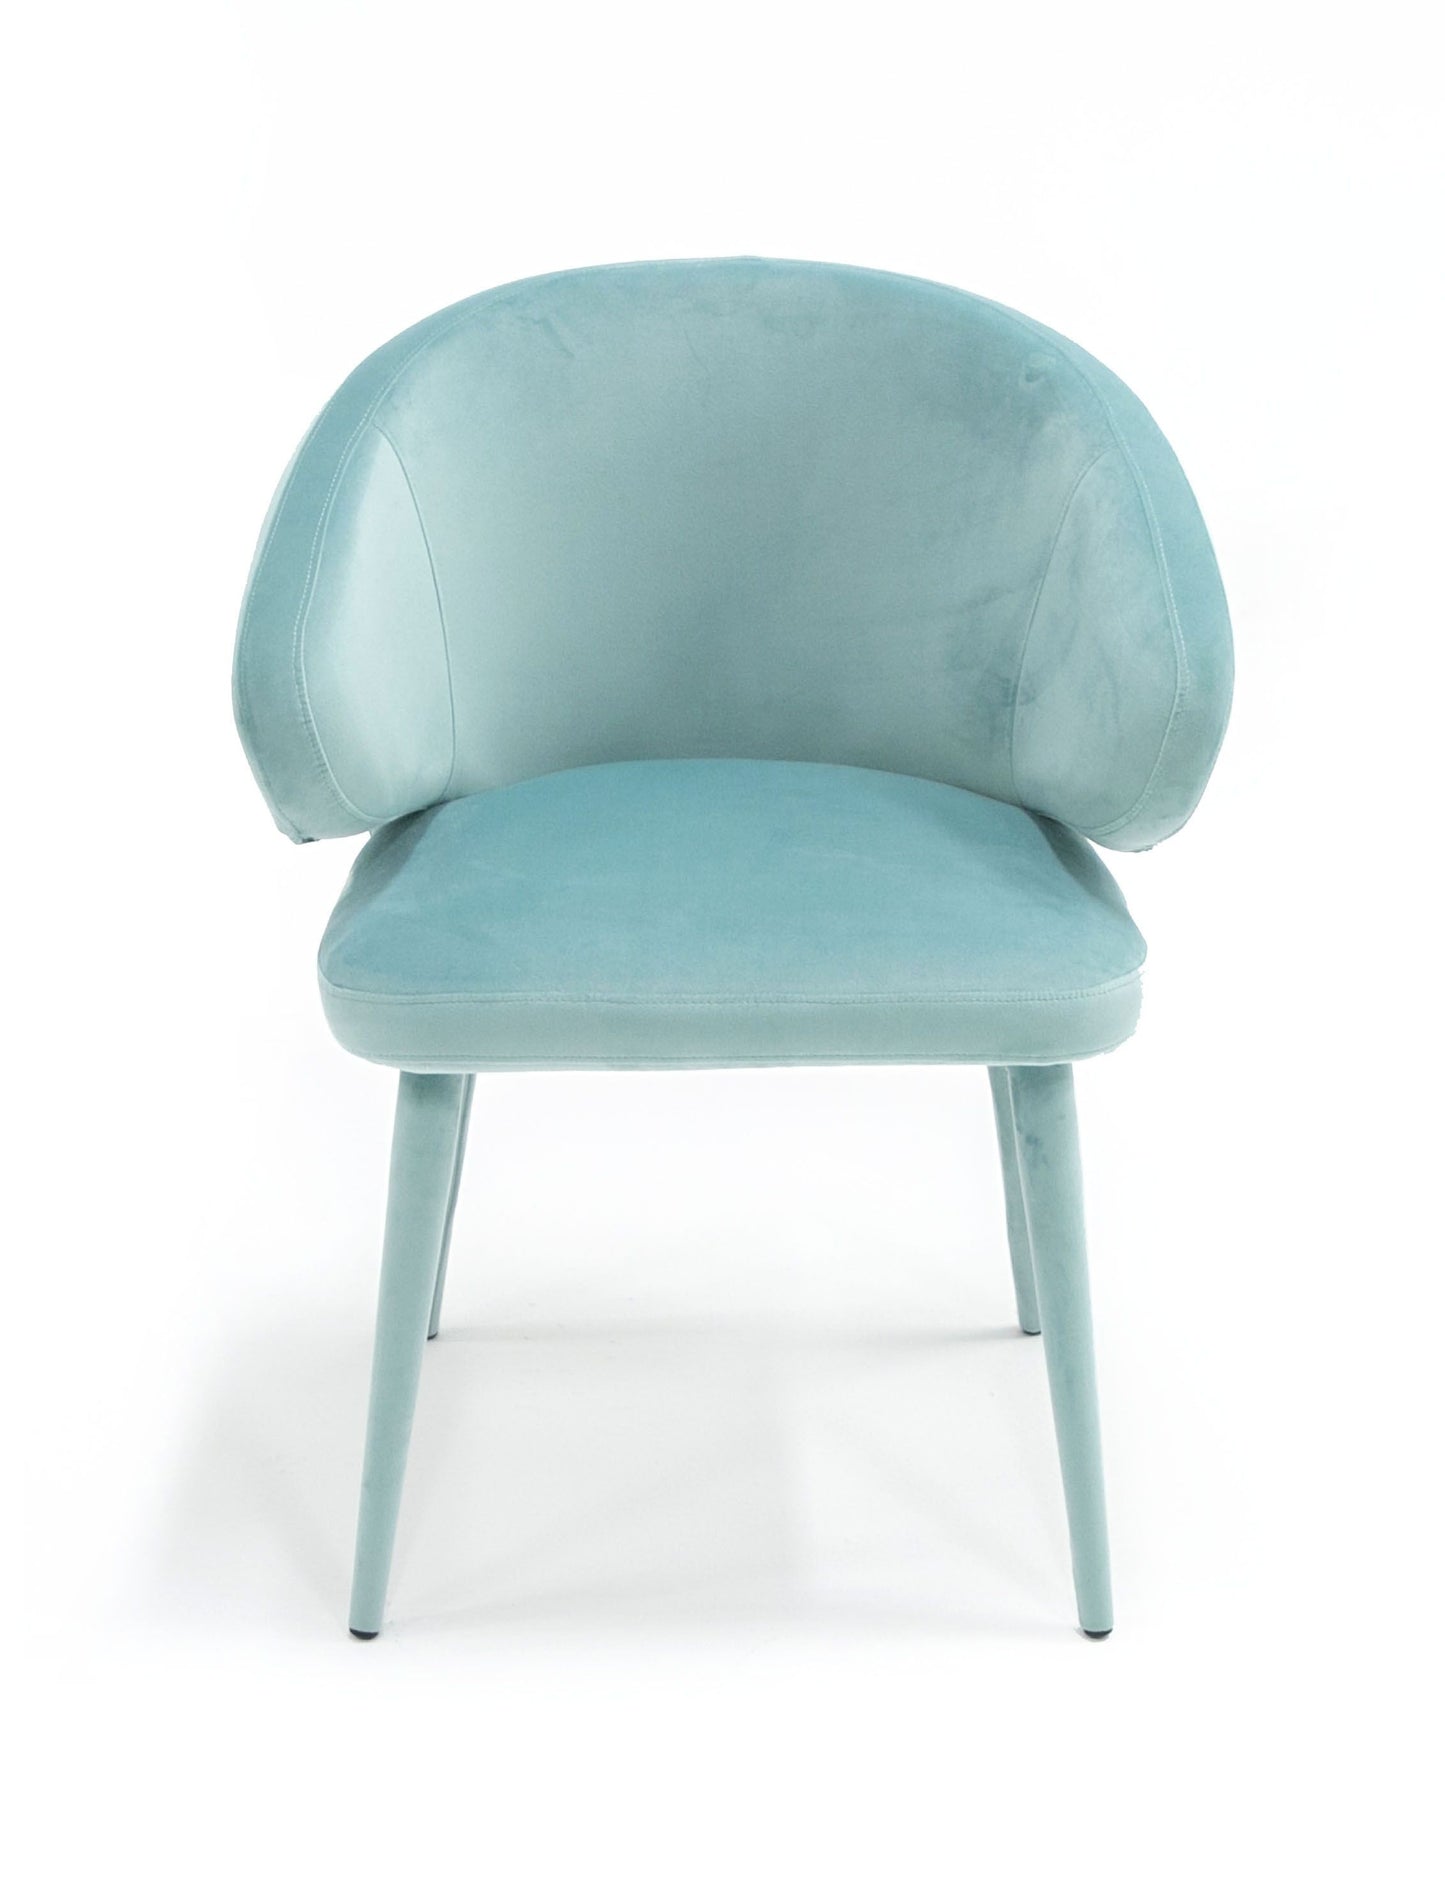 Modrest Salem - Modern Aqua Fabric Dining Chair